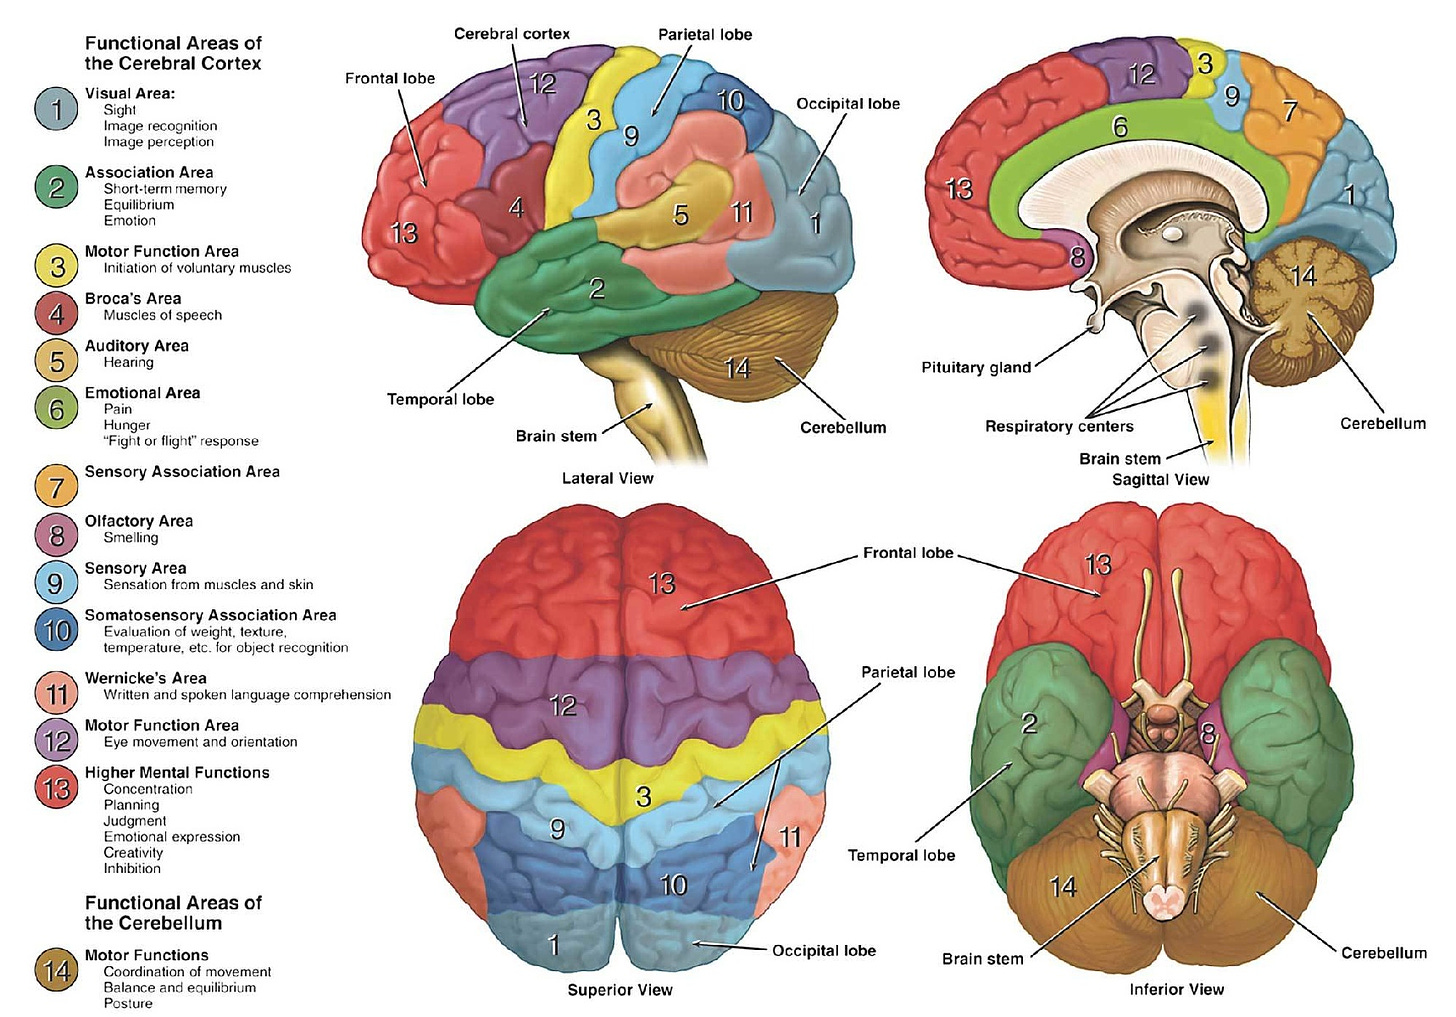 https://www.dana.org/wp-content/uploads/2019/08/anatomy-function-brain-areas-basics-large.jpg